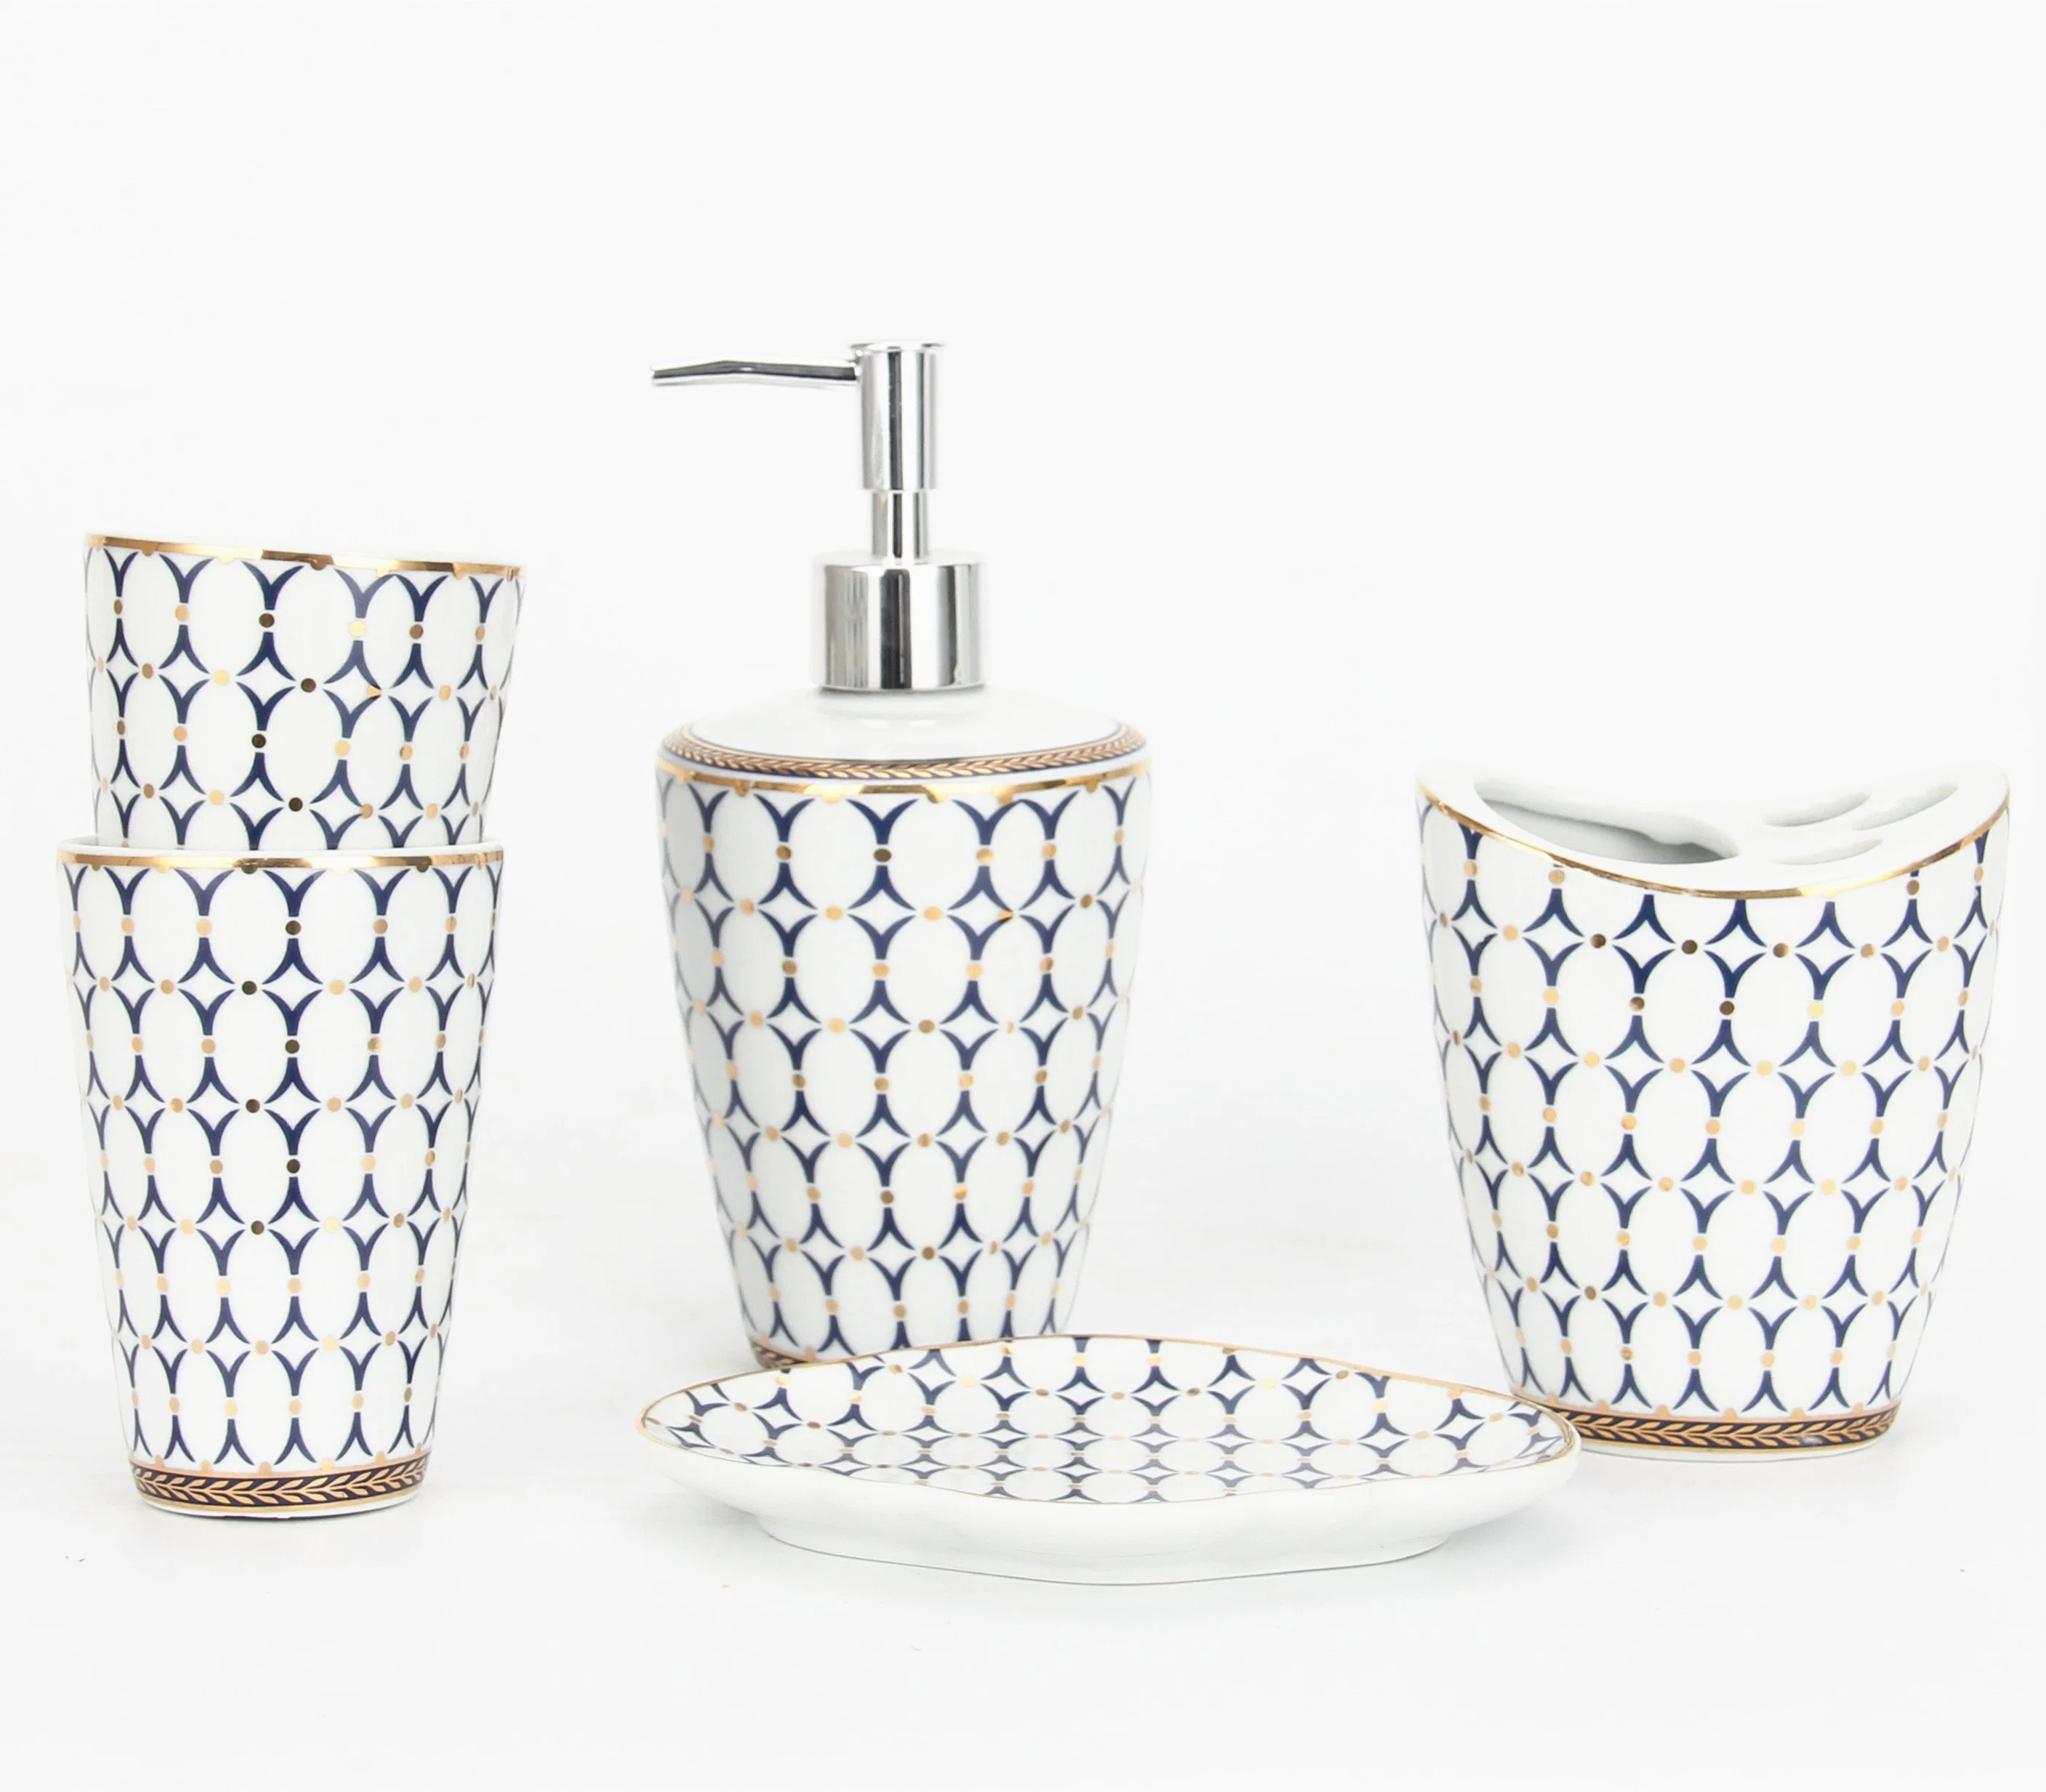 Br018 Fancy Porcelain Toothbrush Holder Lotion Bottle Soap Dish Set 5 PCS Modern Ceramic Bathroom Accessories for Hotel